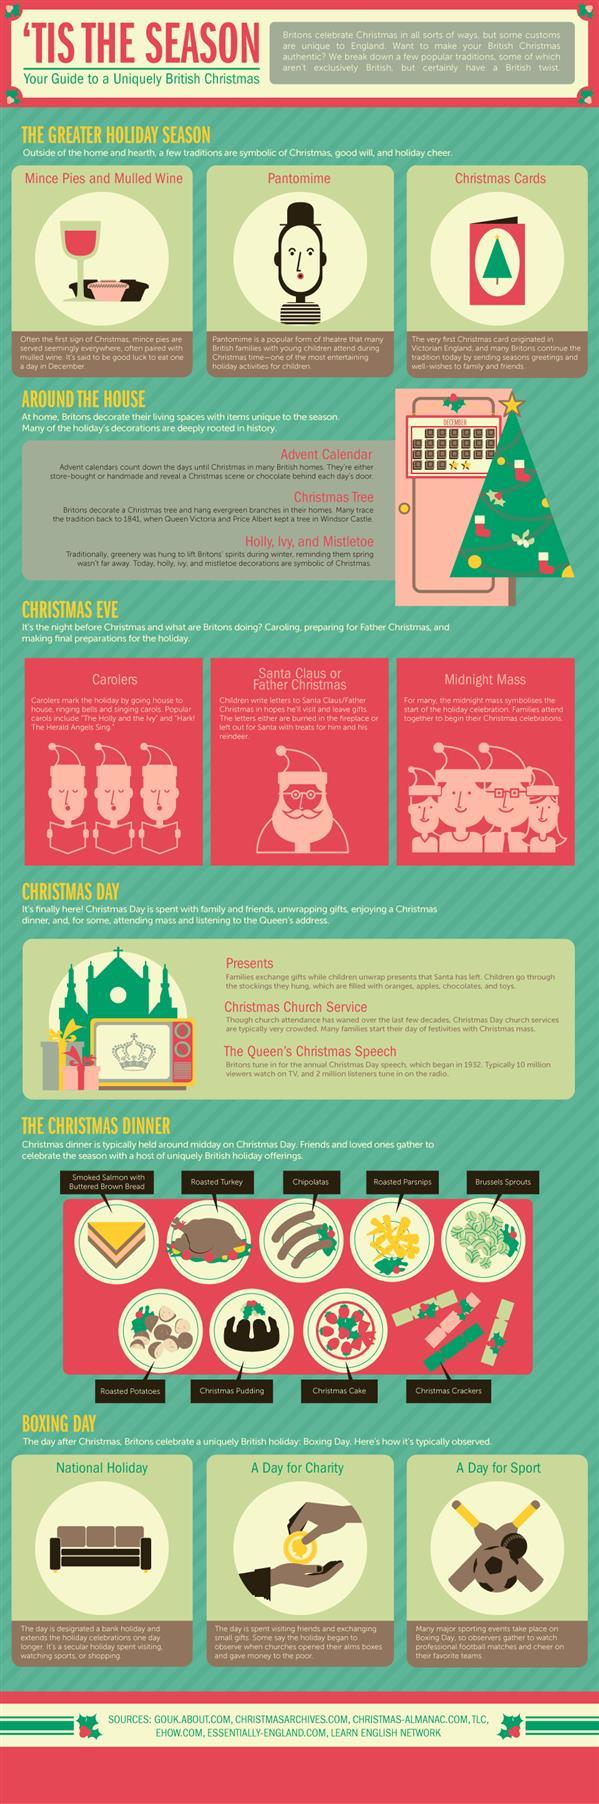 British Christmas traditions infographic